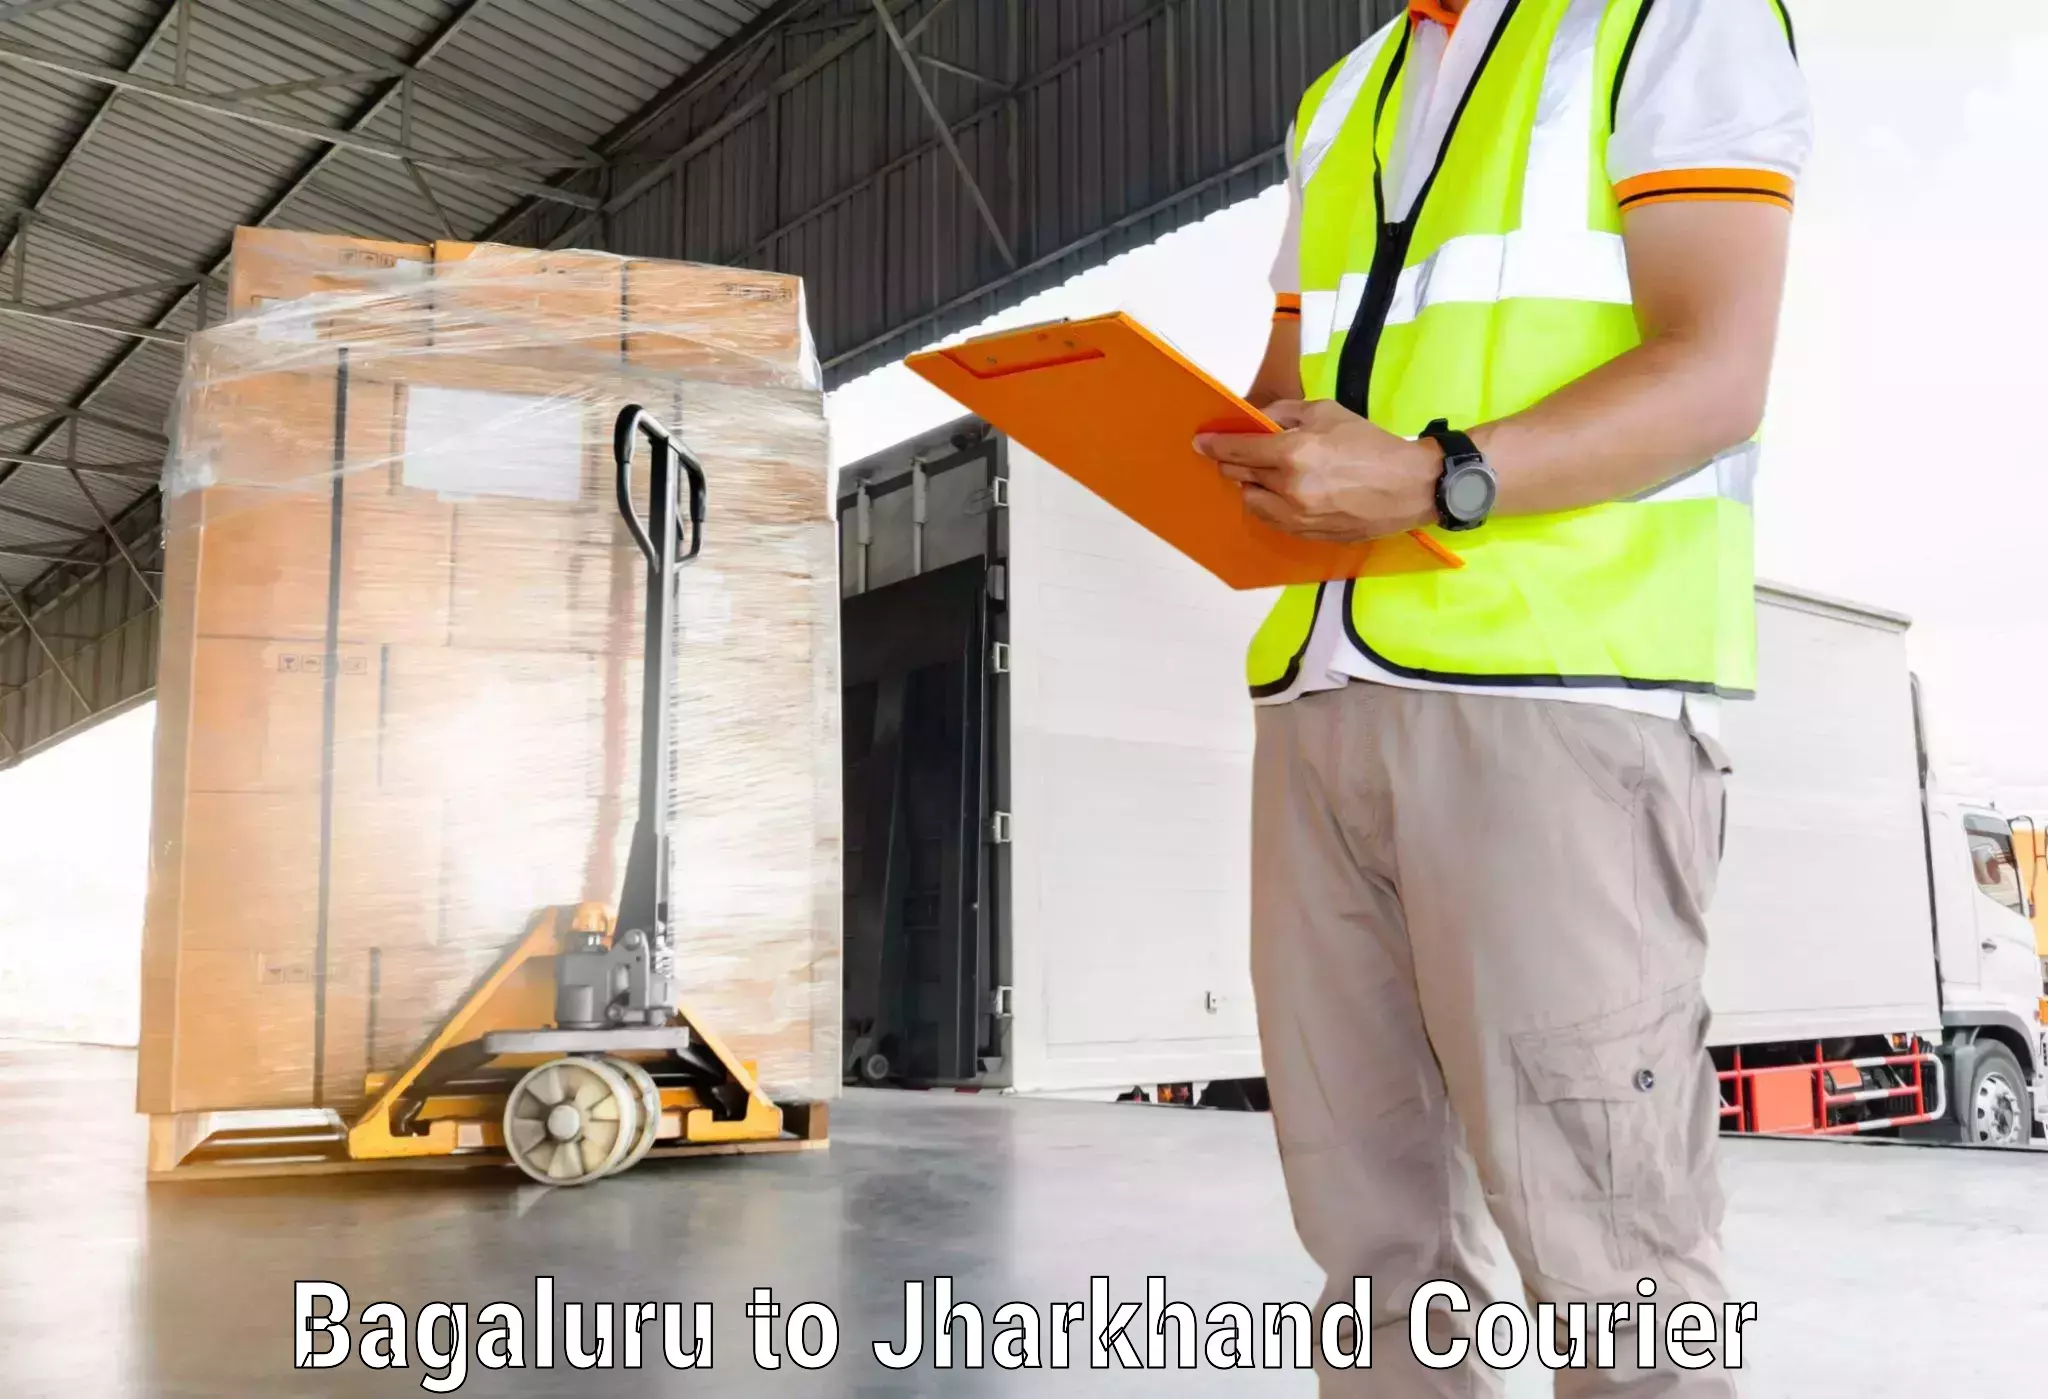 High-speed delivery in Bagaluru to Panki Palamu